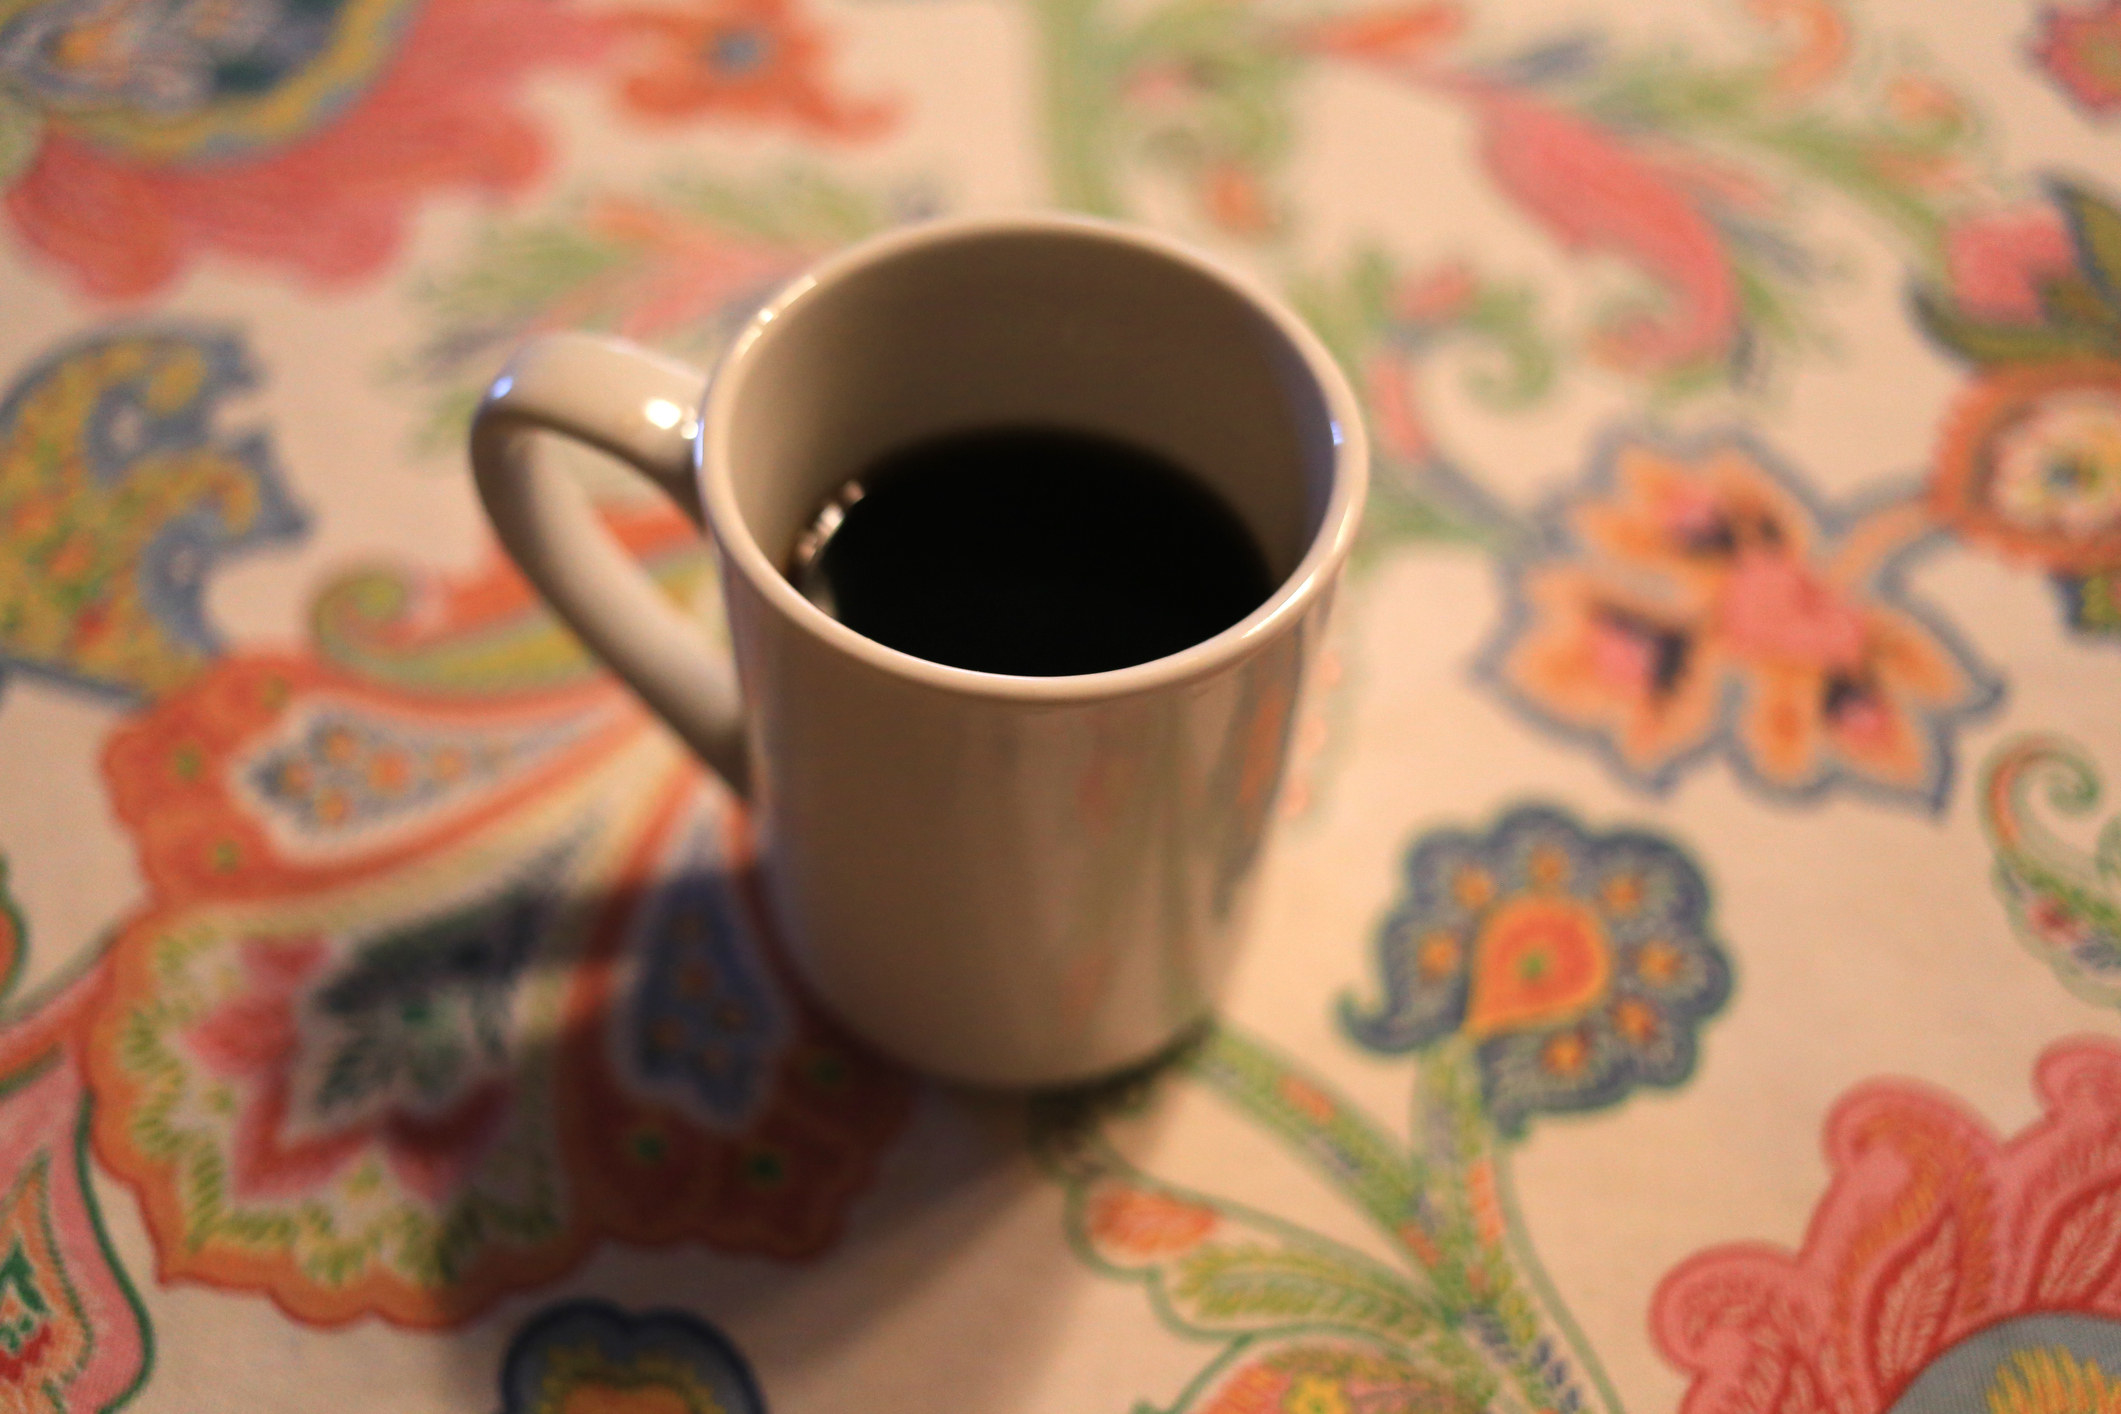 A mug of coffee on a table.